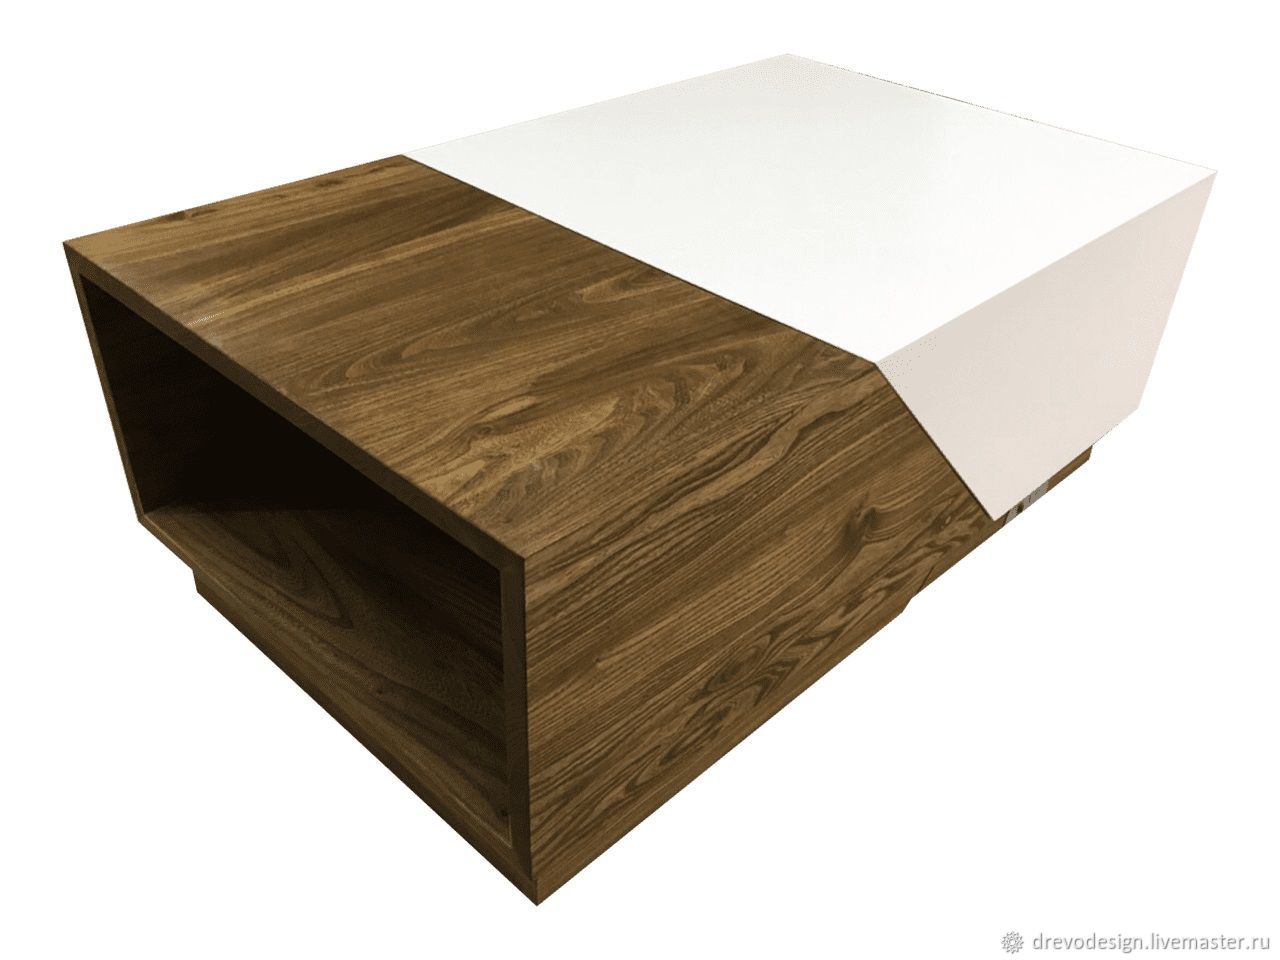 Extendable coffee table, Tables, Belgorod,  Фото №1